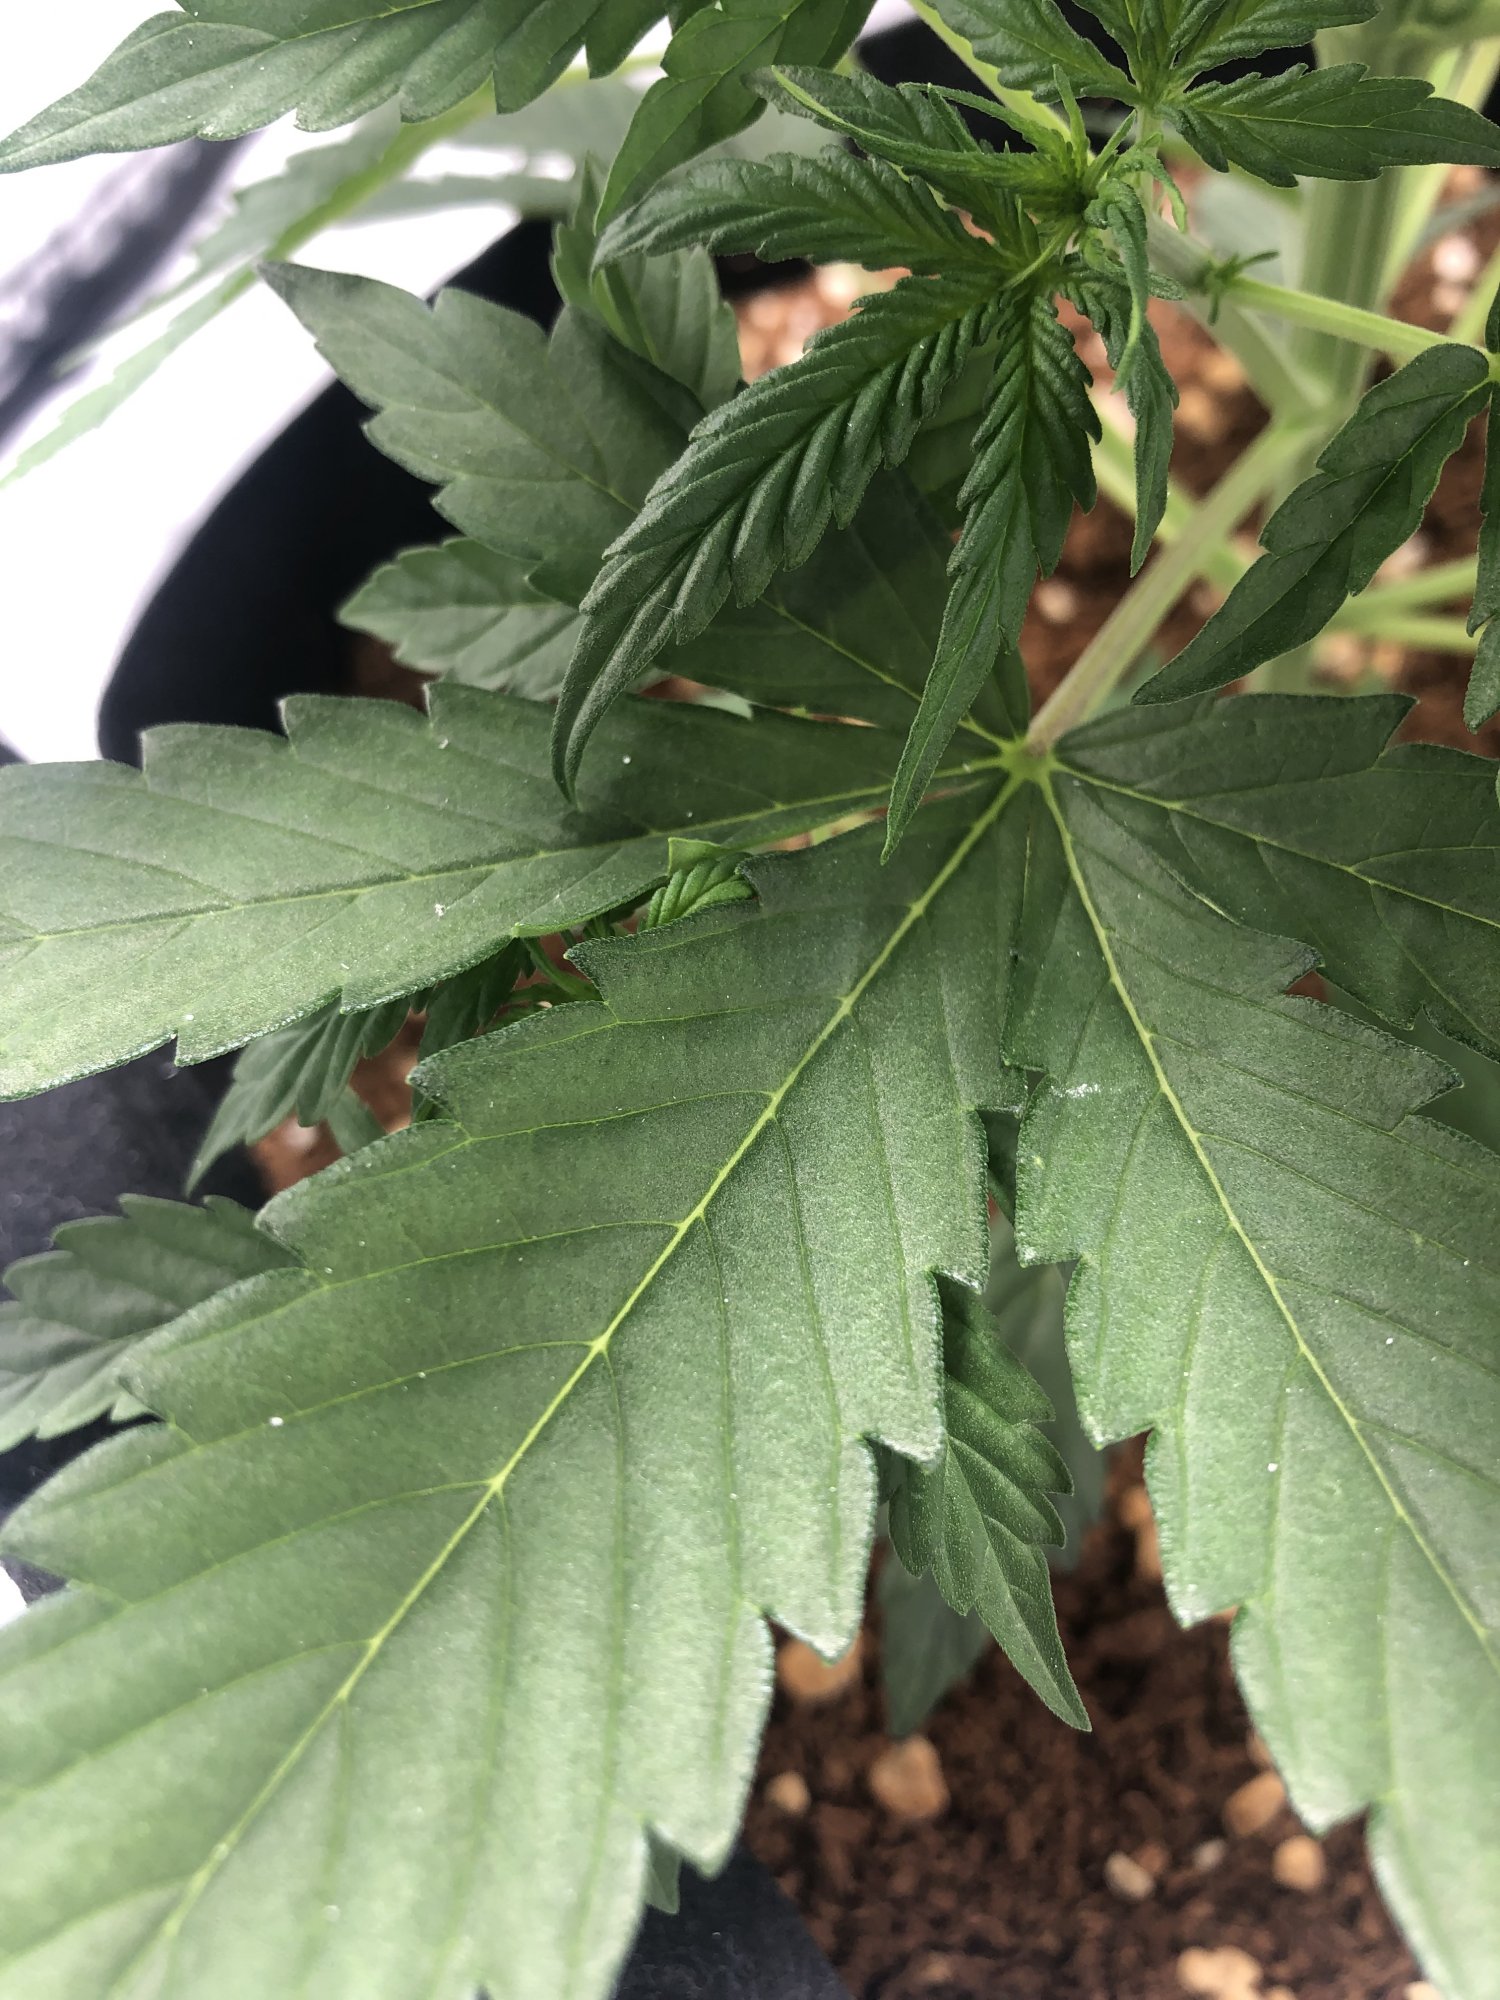 White spots on leaves 3